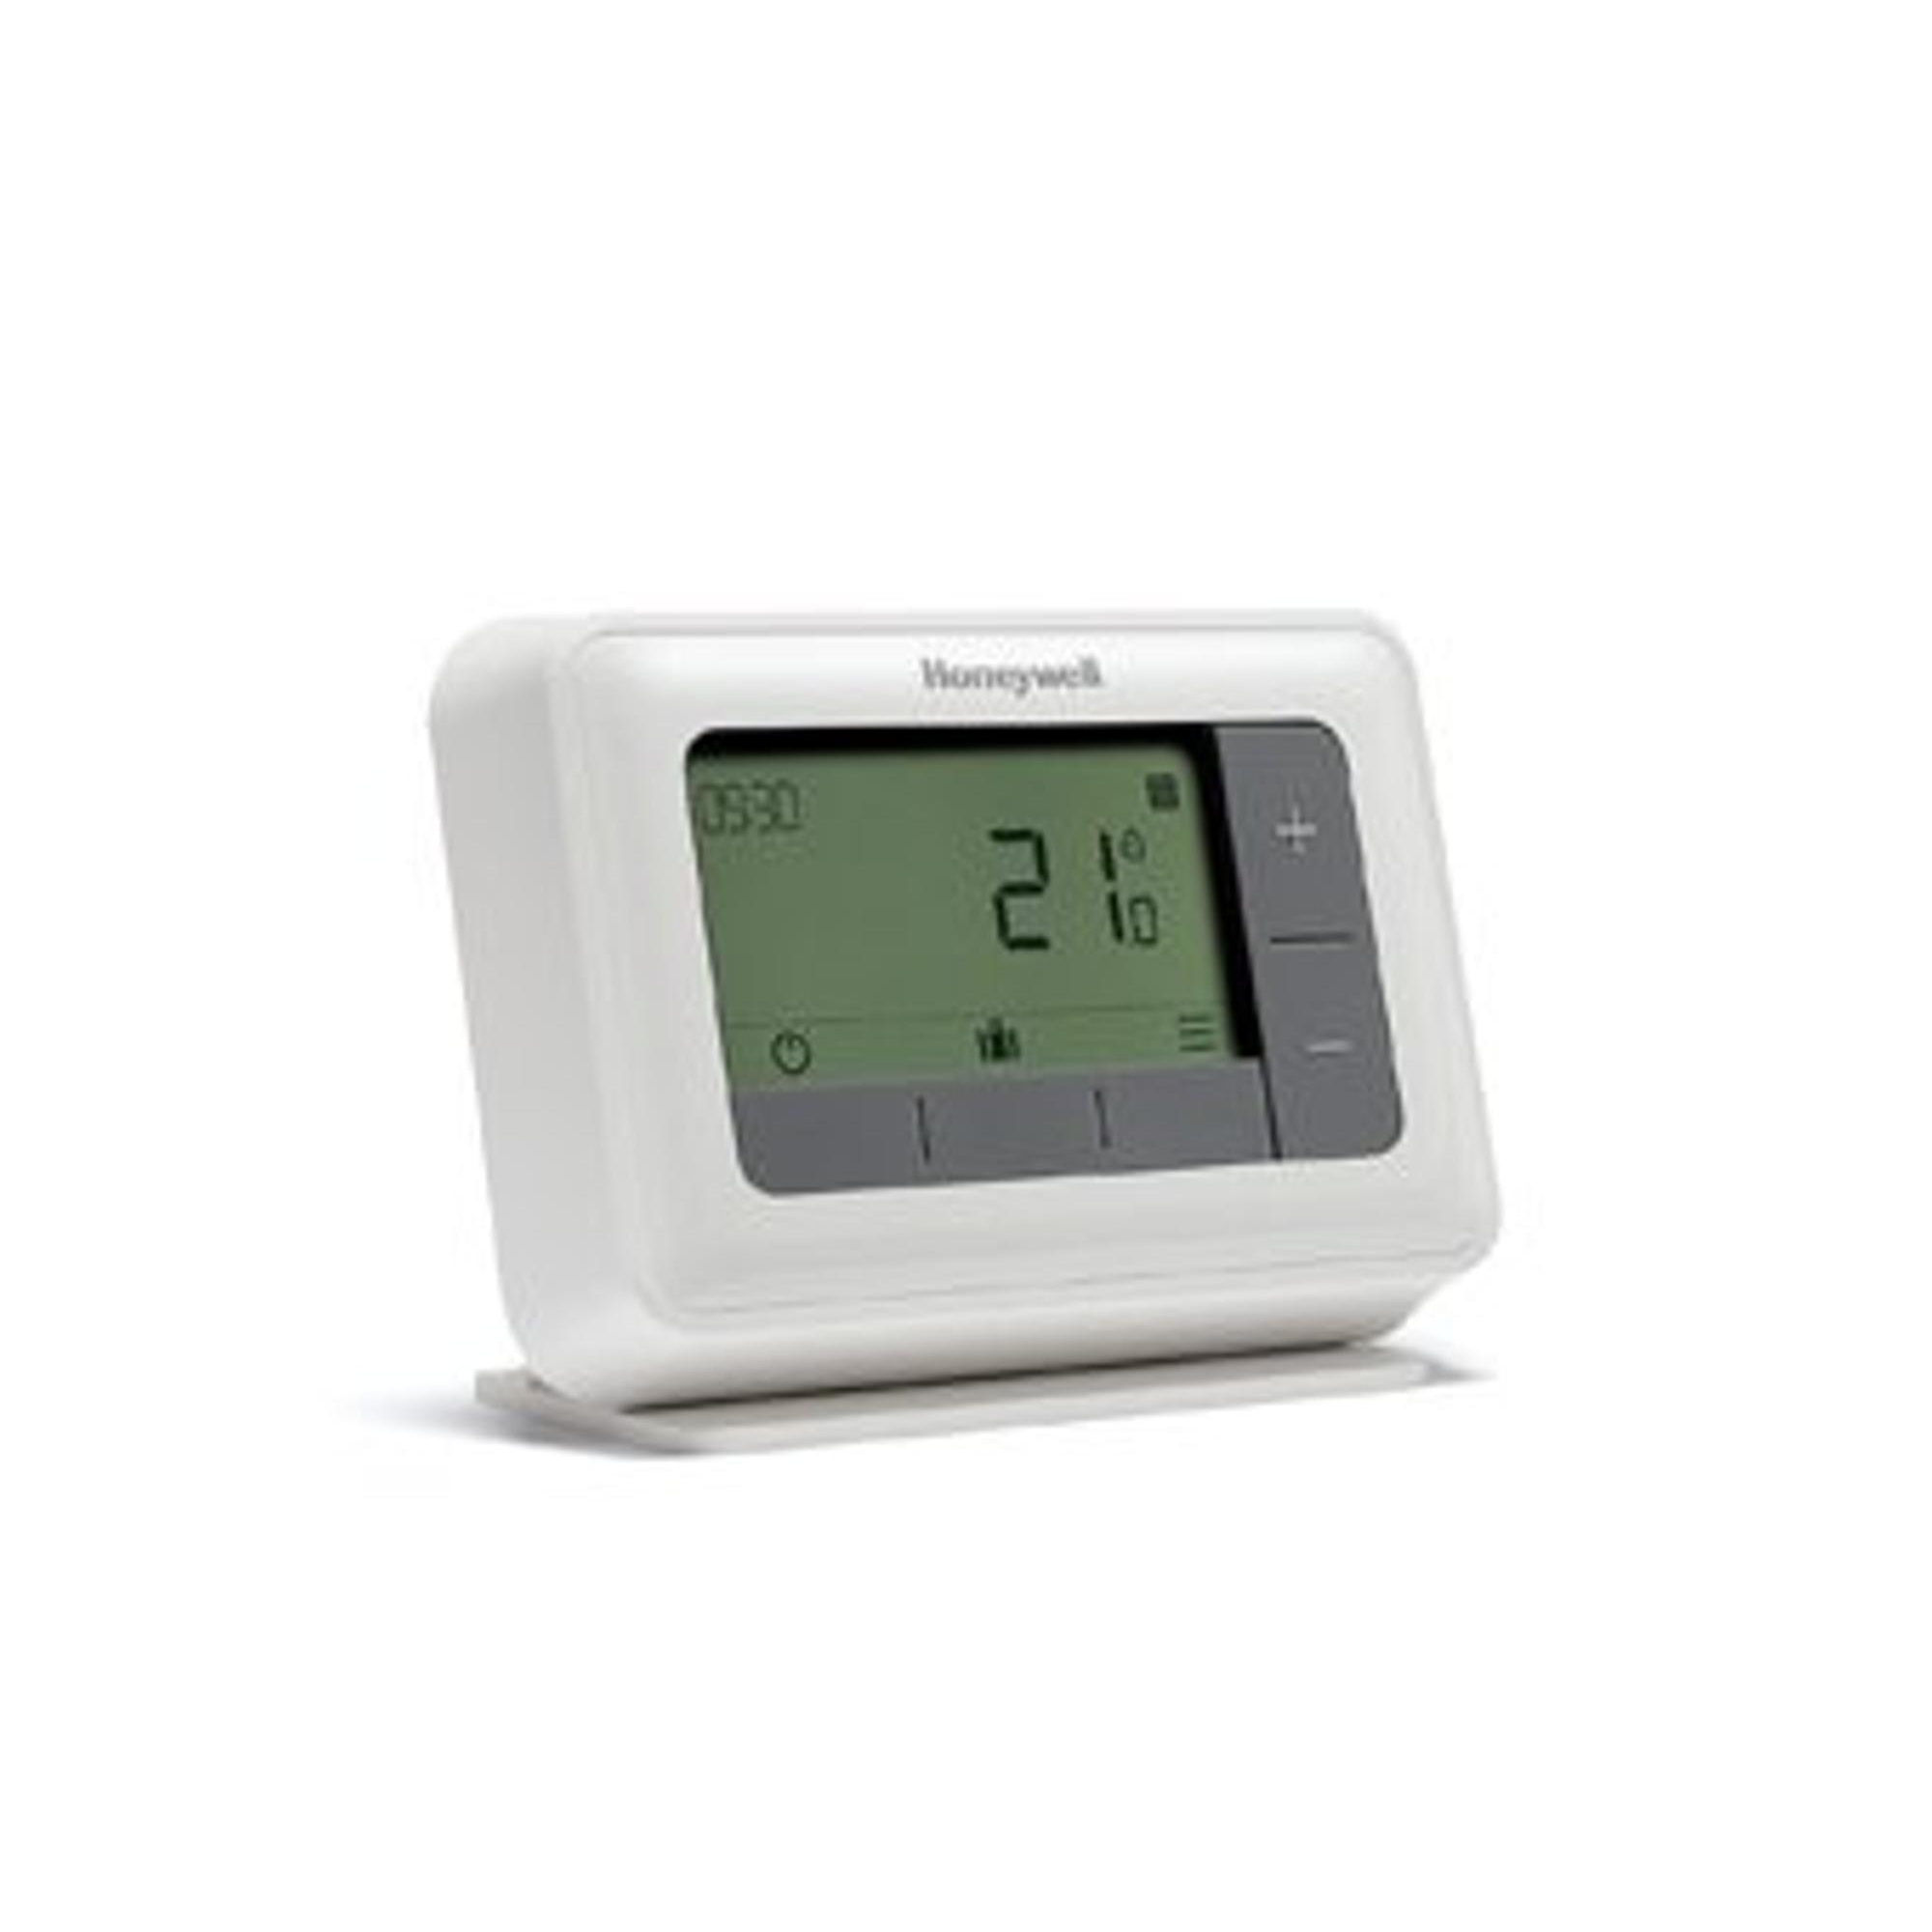 Le pack thermostat d'ambiance programmable sans fil